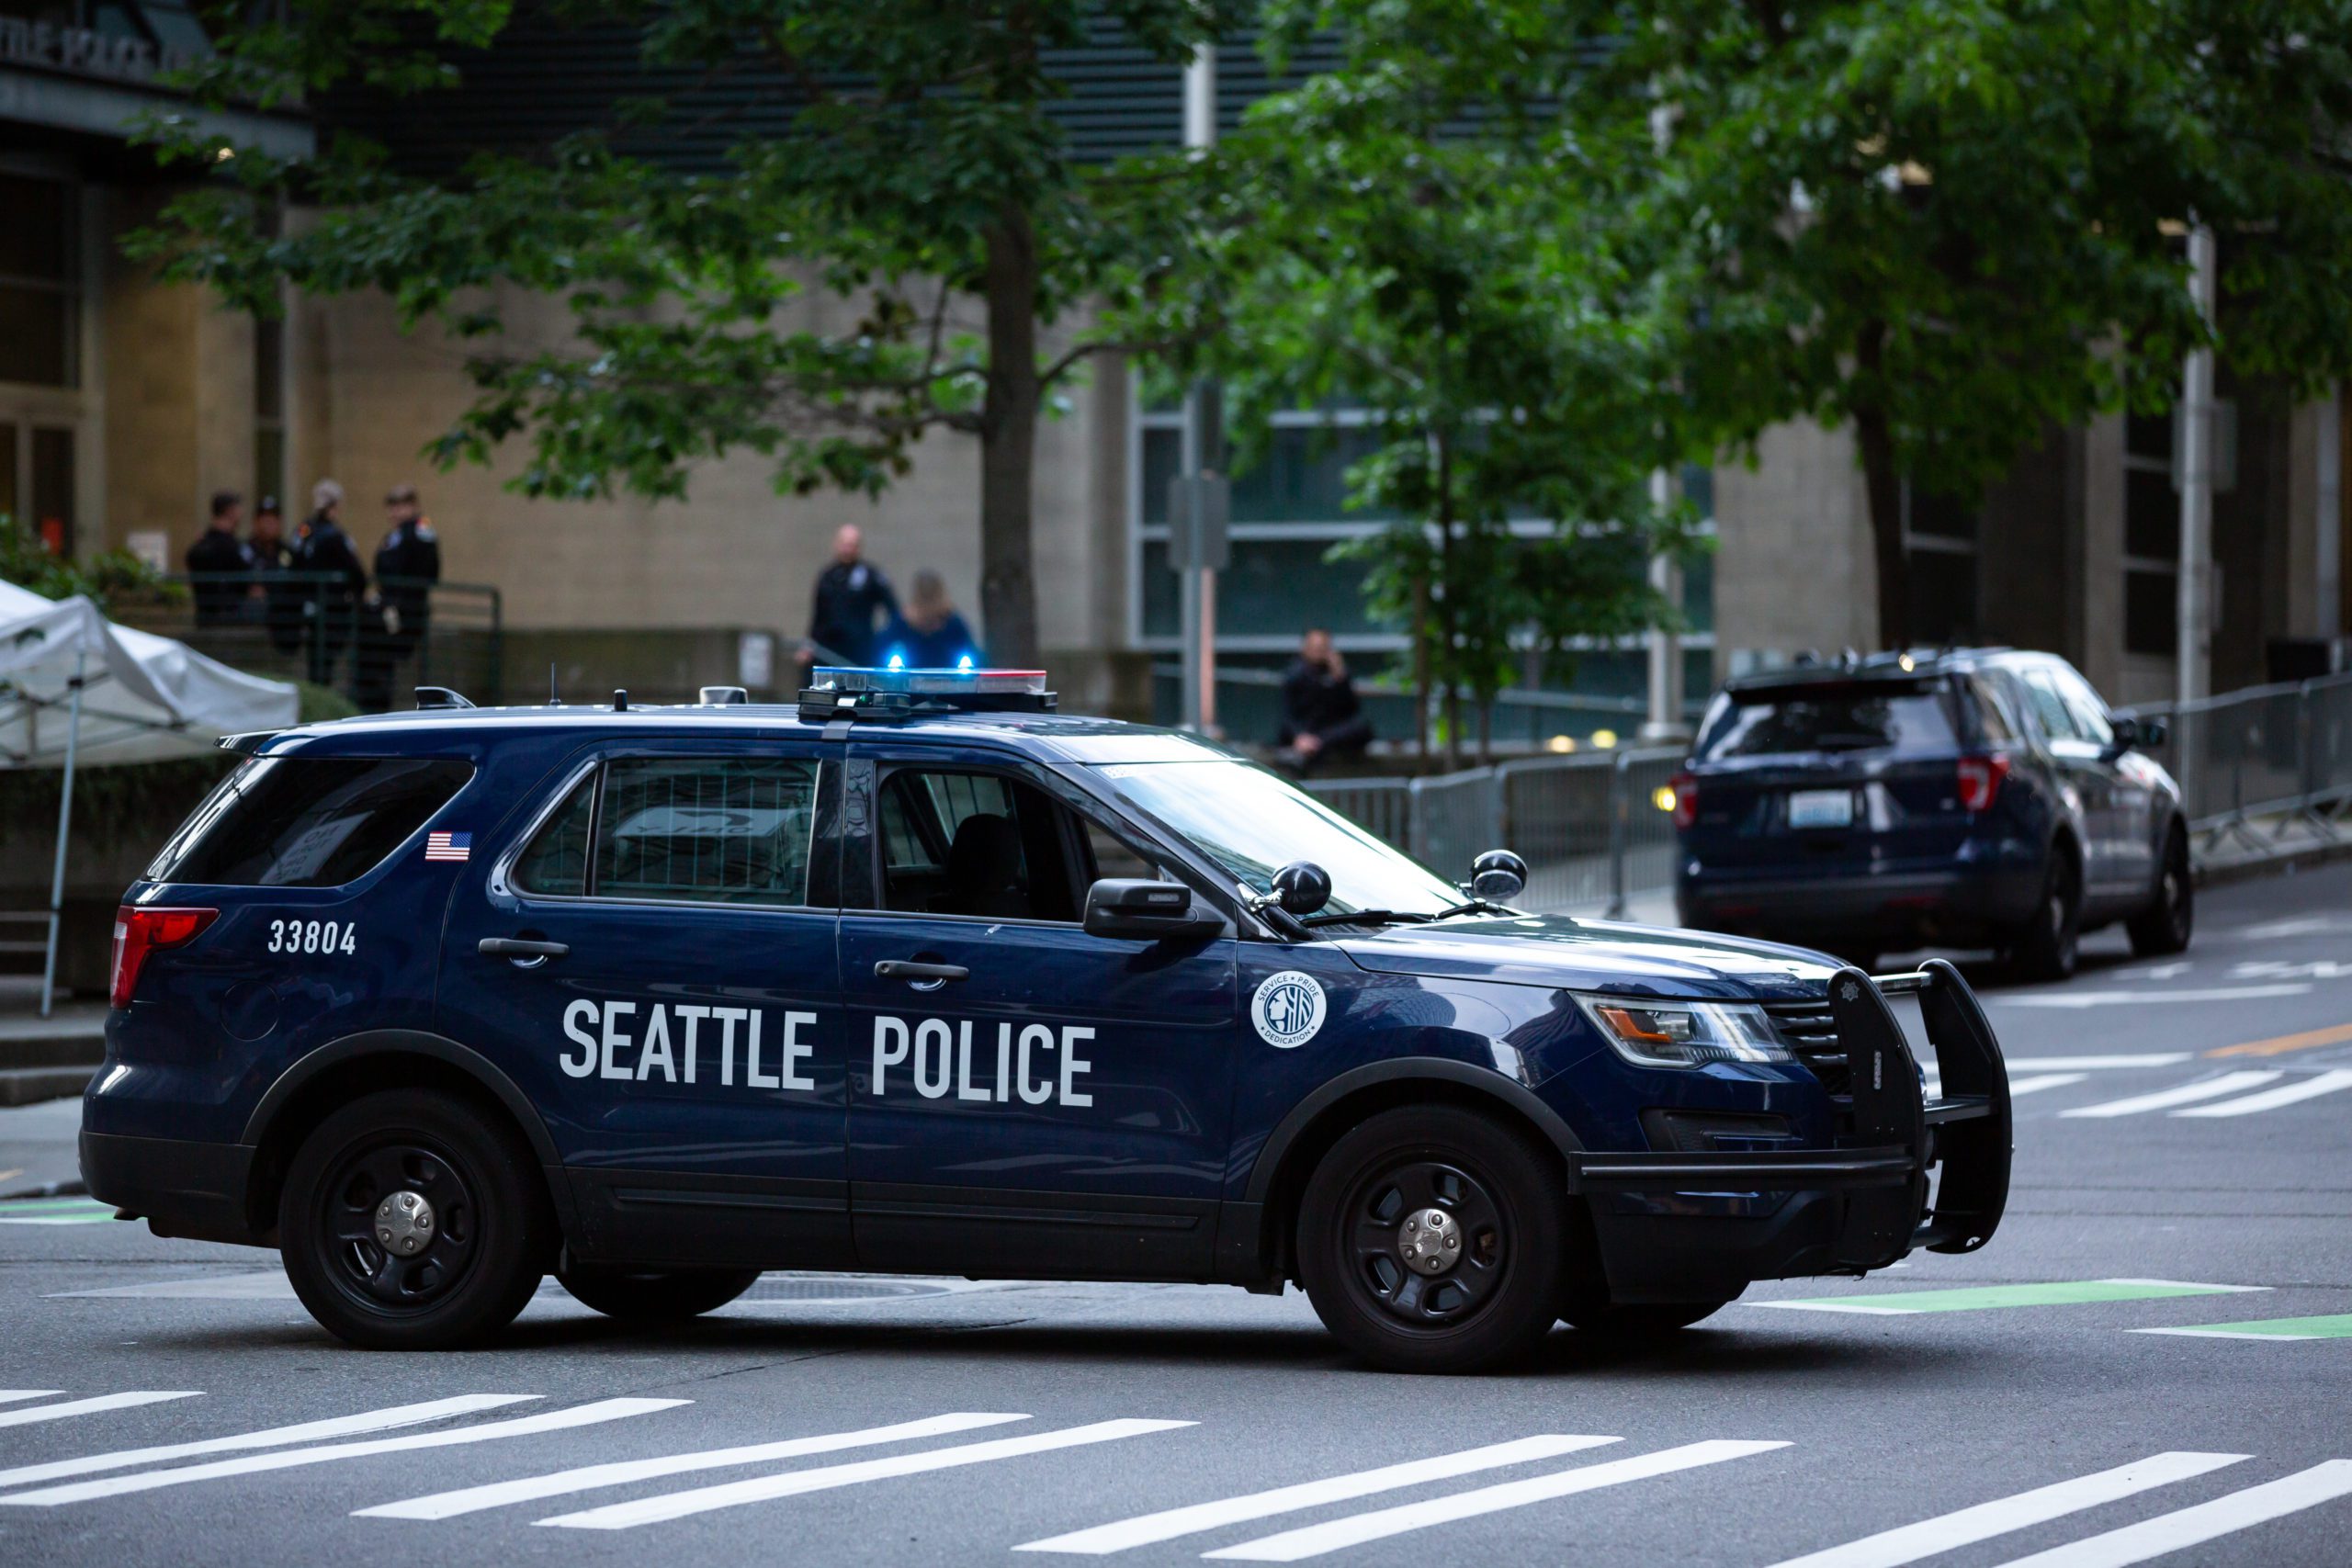 Seattle Police Unit